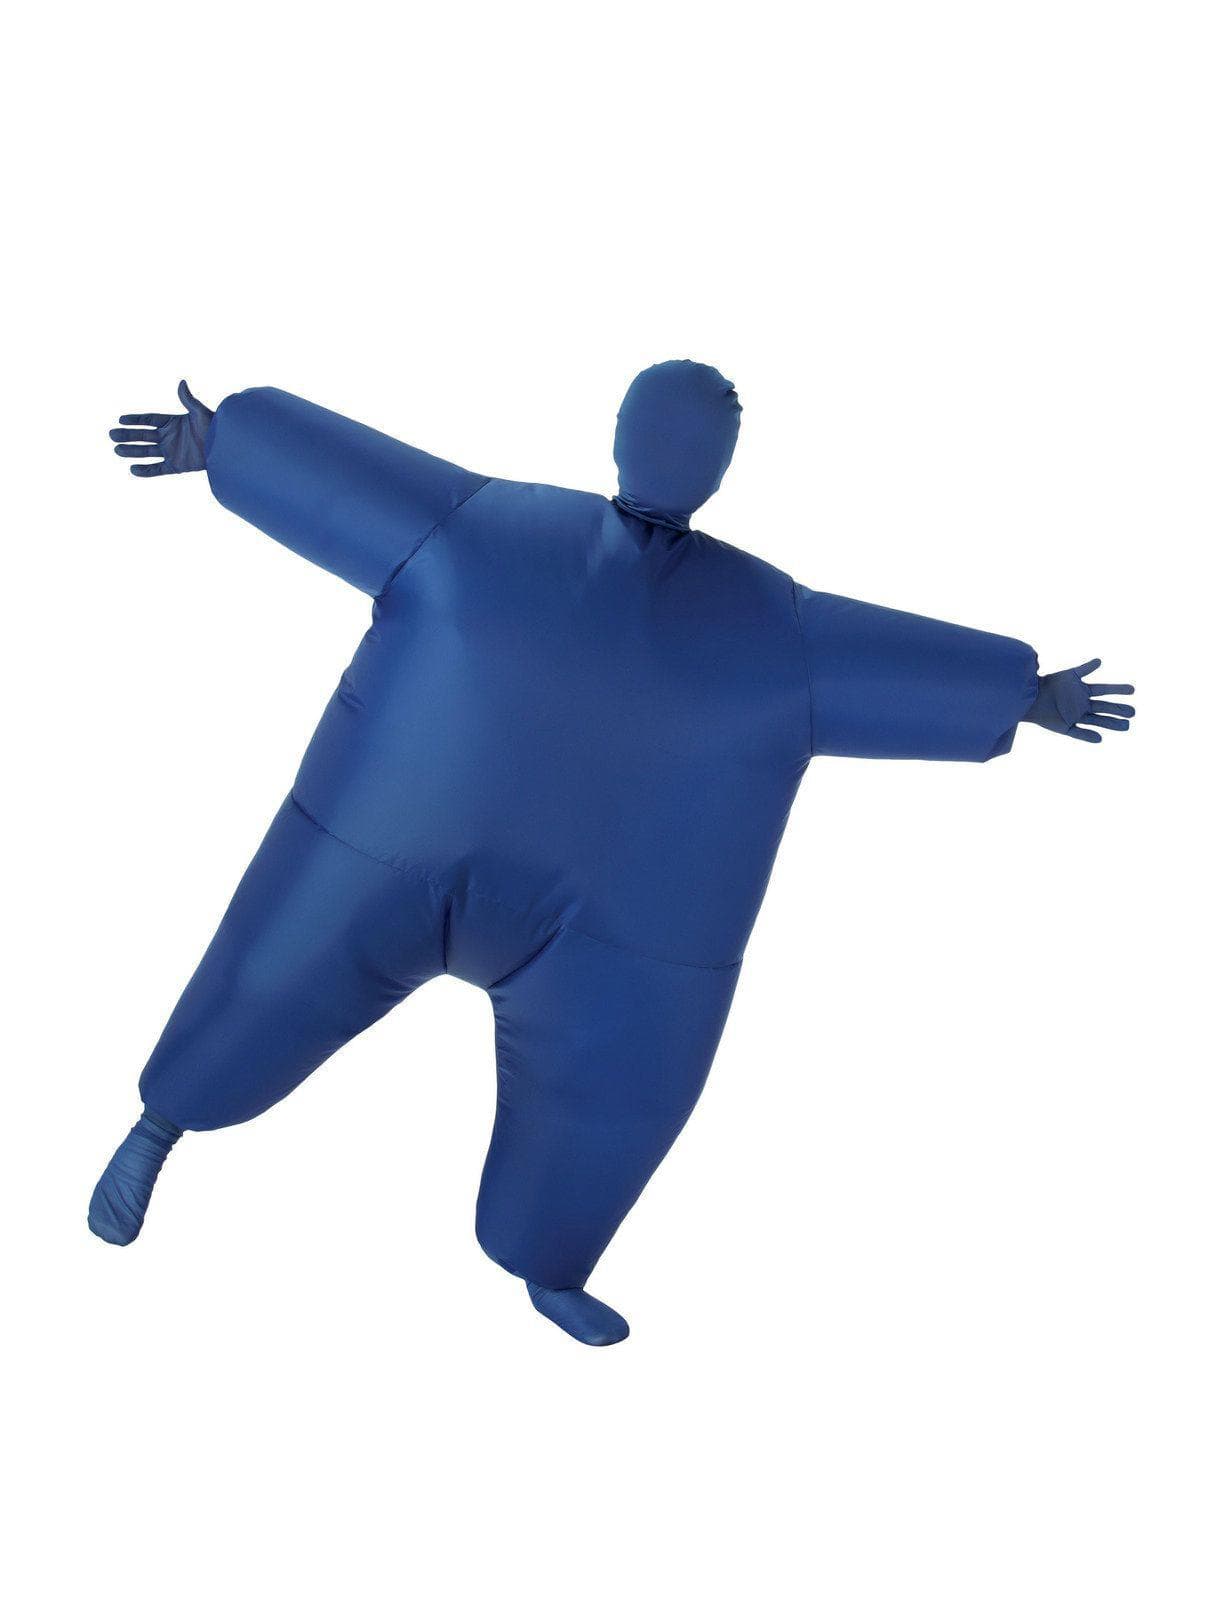 Kids' Blue Inflatable Jumpsuit - costumes.com